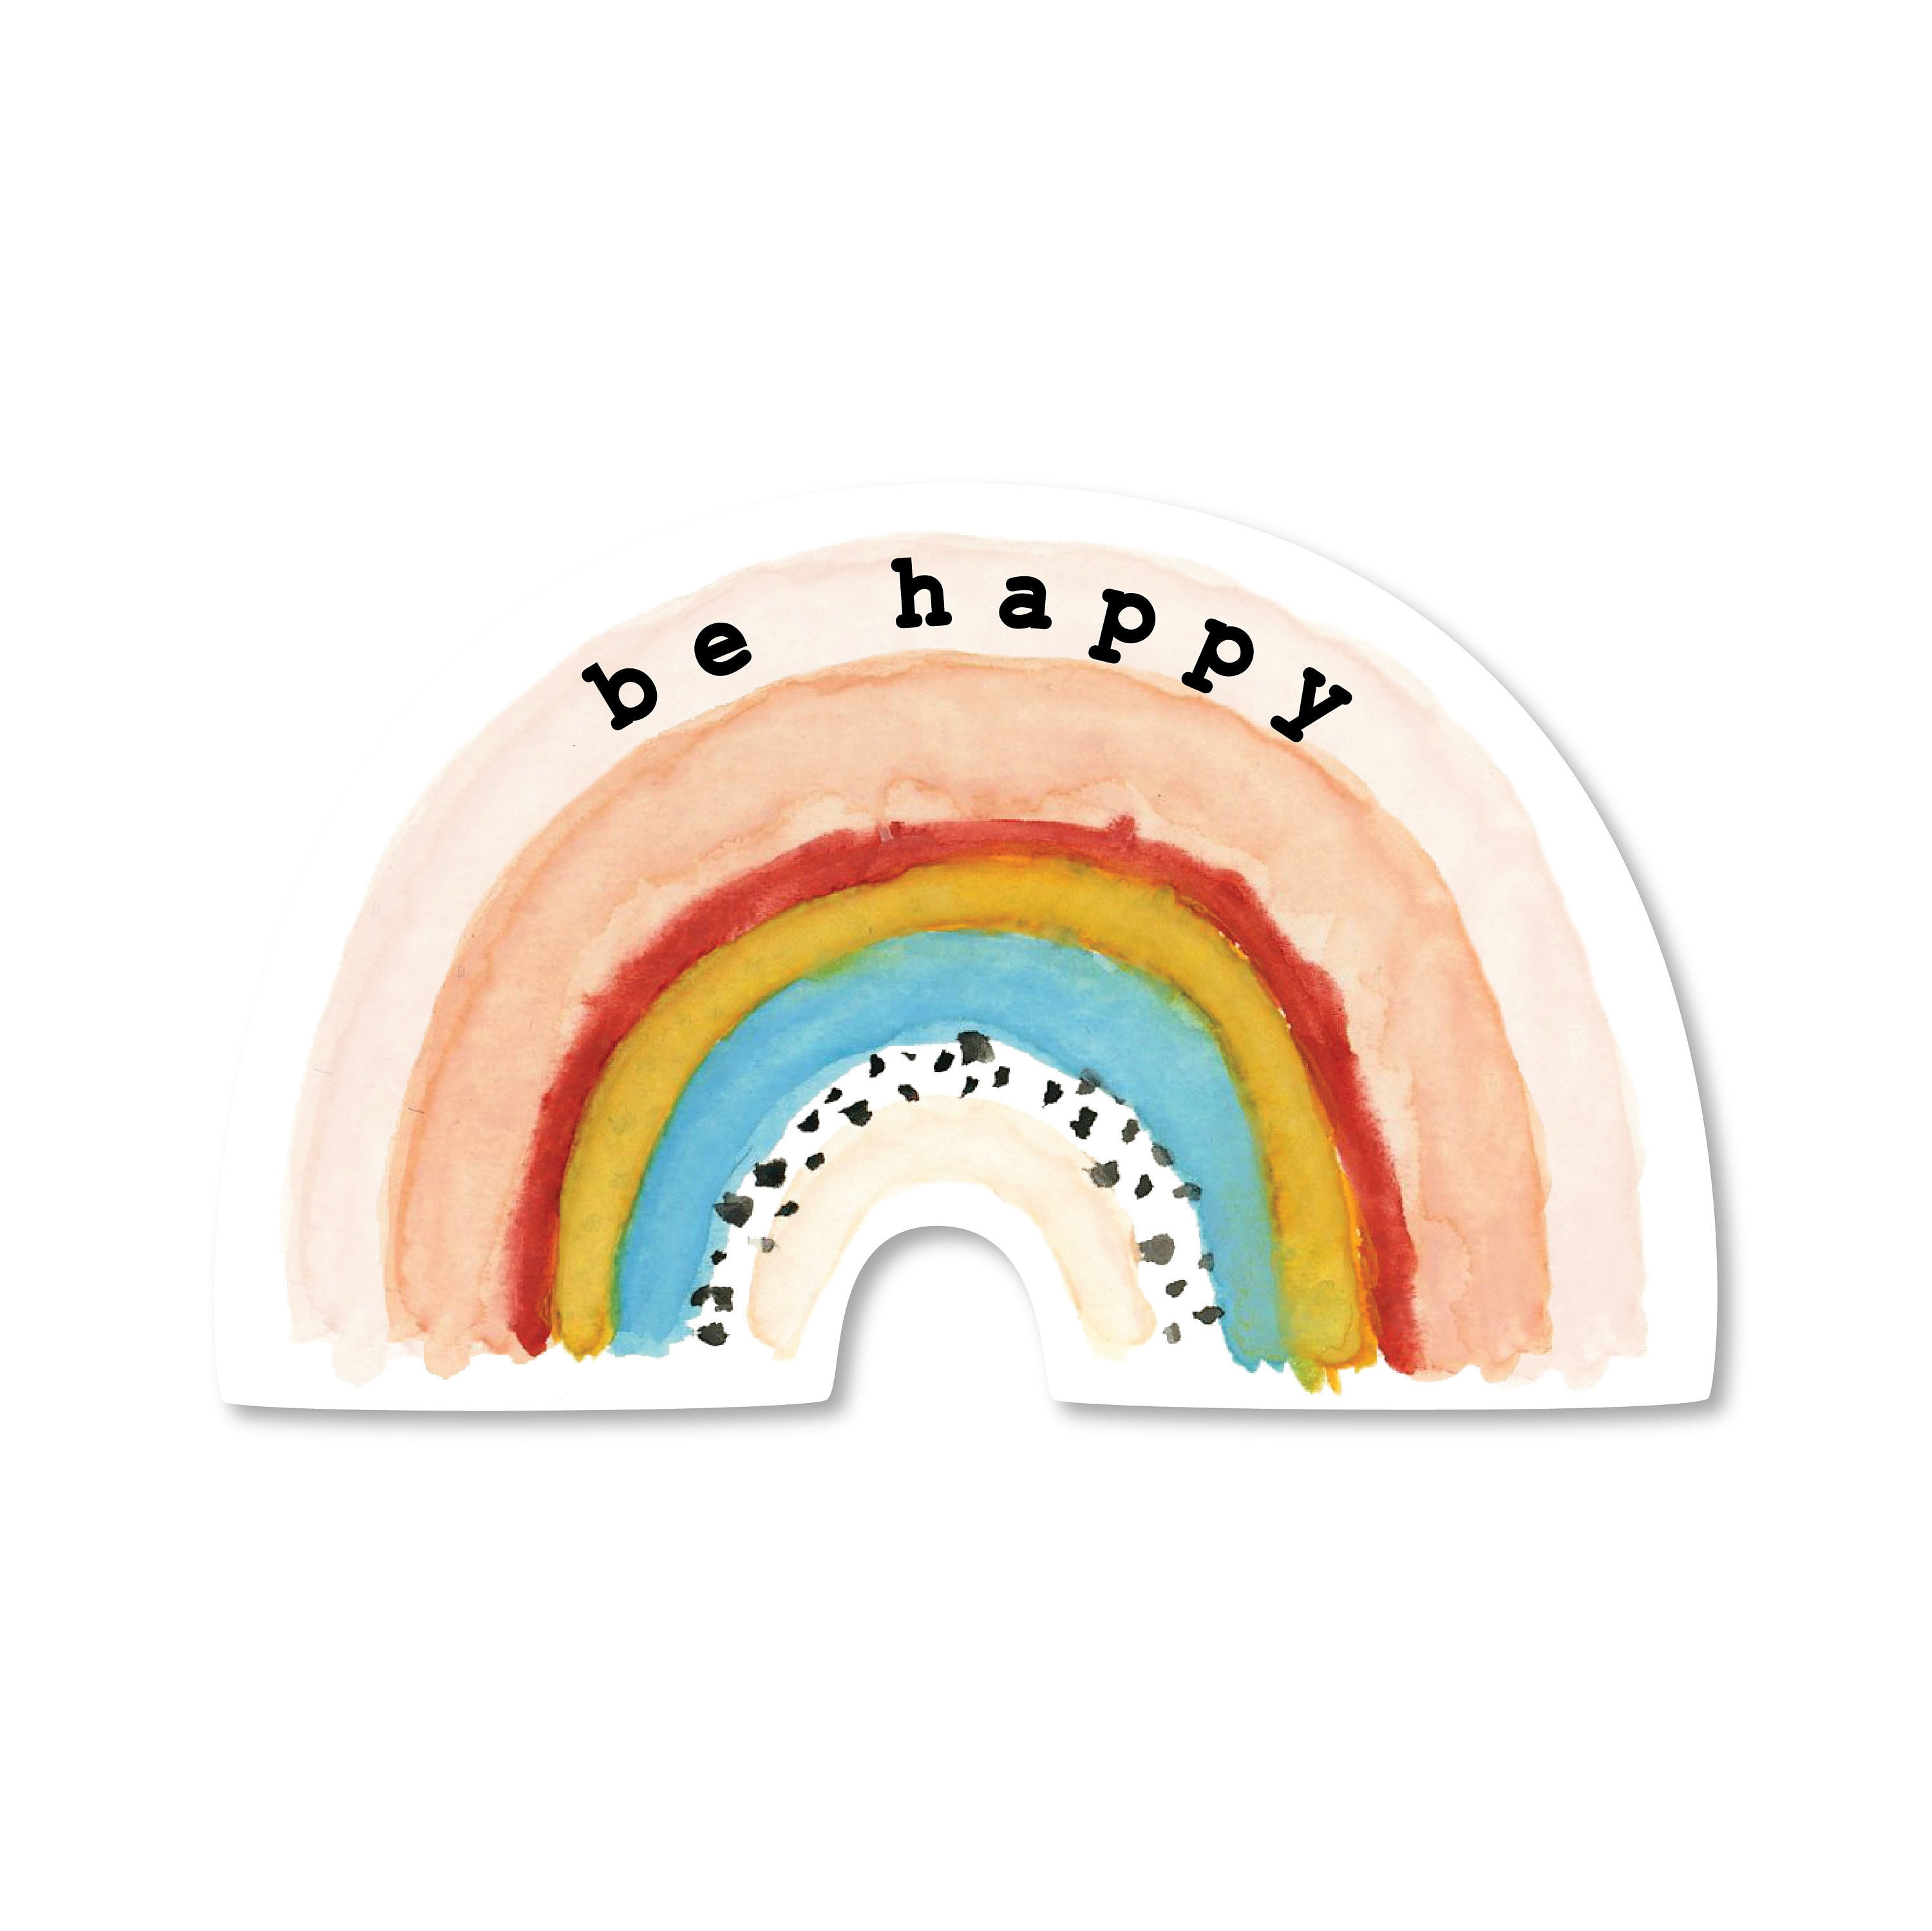 Joyful Rainbow Sticker 3x3in Vinyl Sticker for your Laptop Water Bottle or Bumper